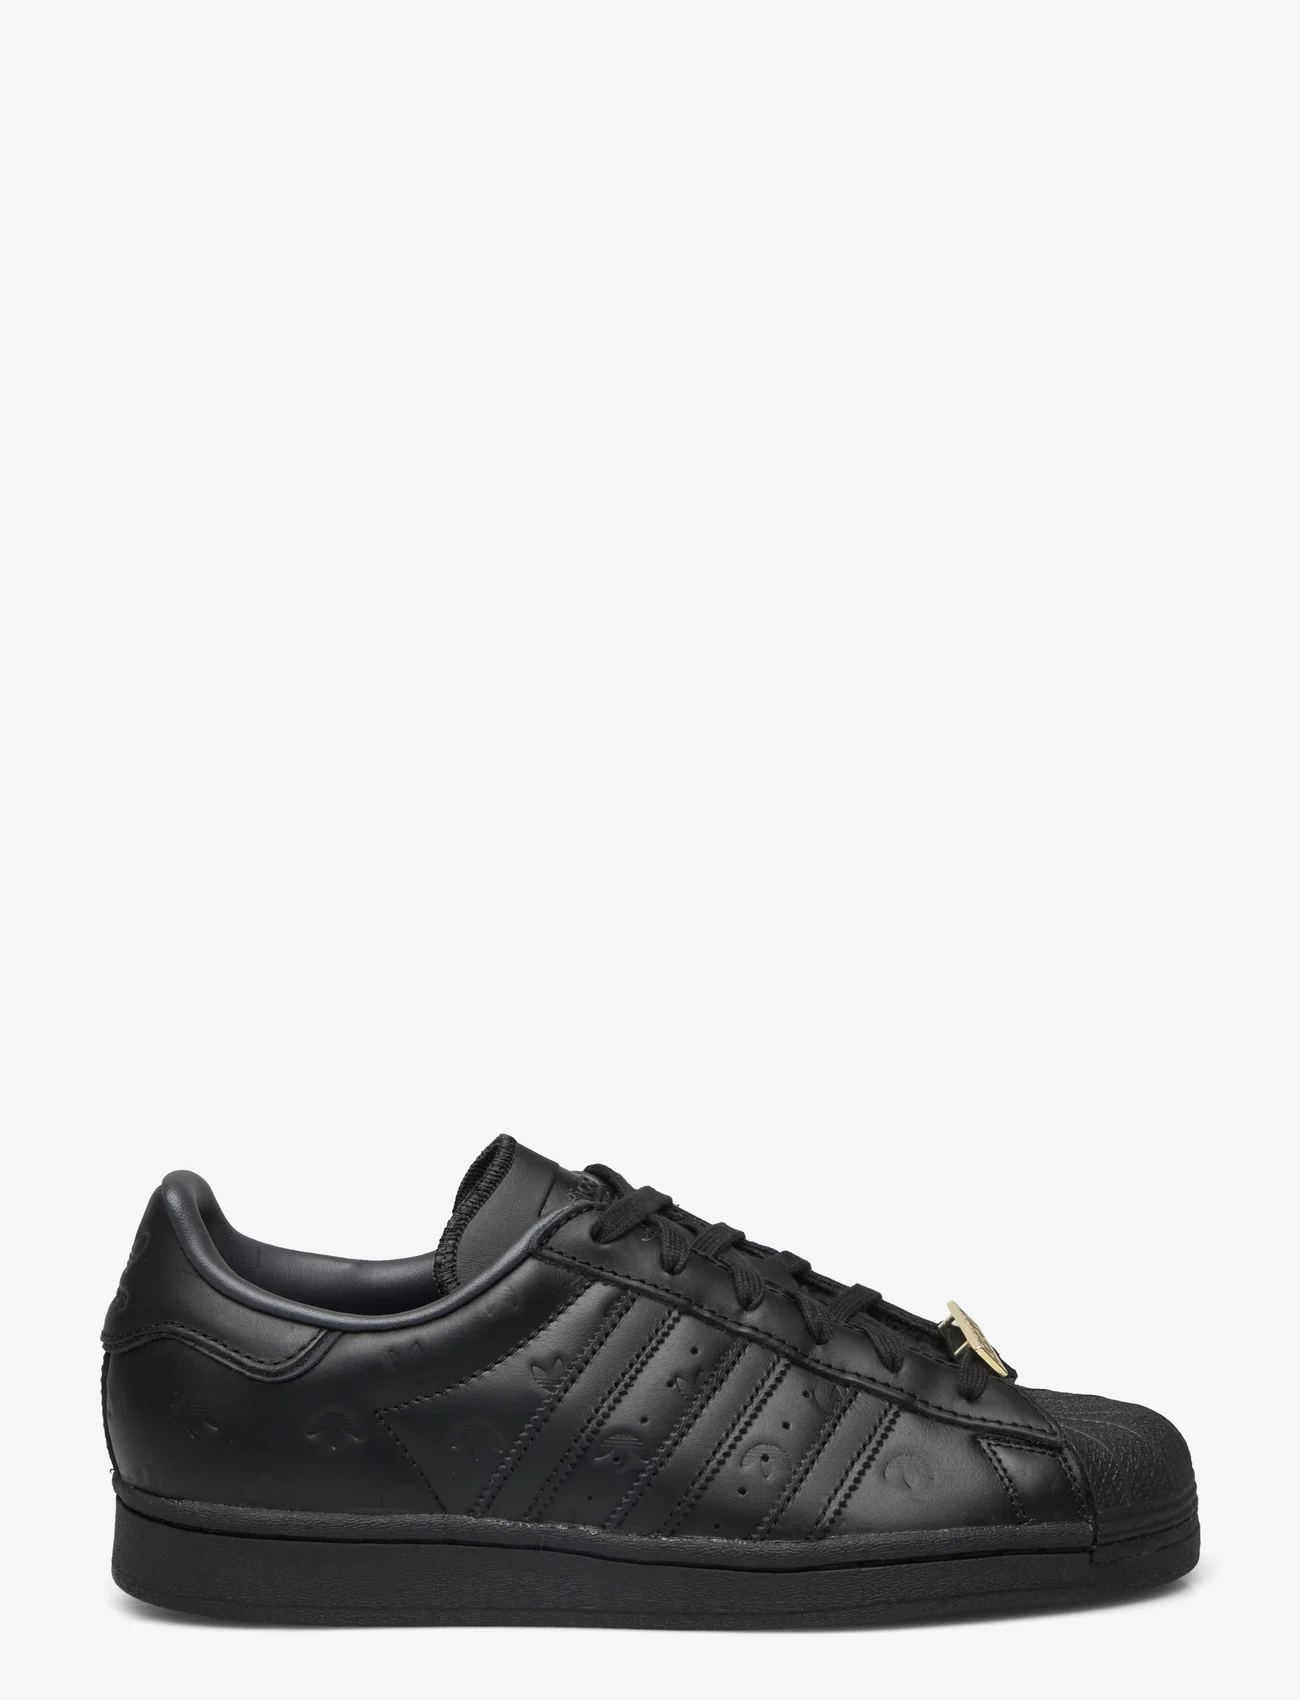 adidas Originals - Superstar Shoes - låga sneakers - cblack/cblack/carbon - 1